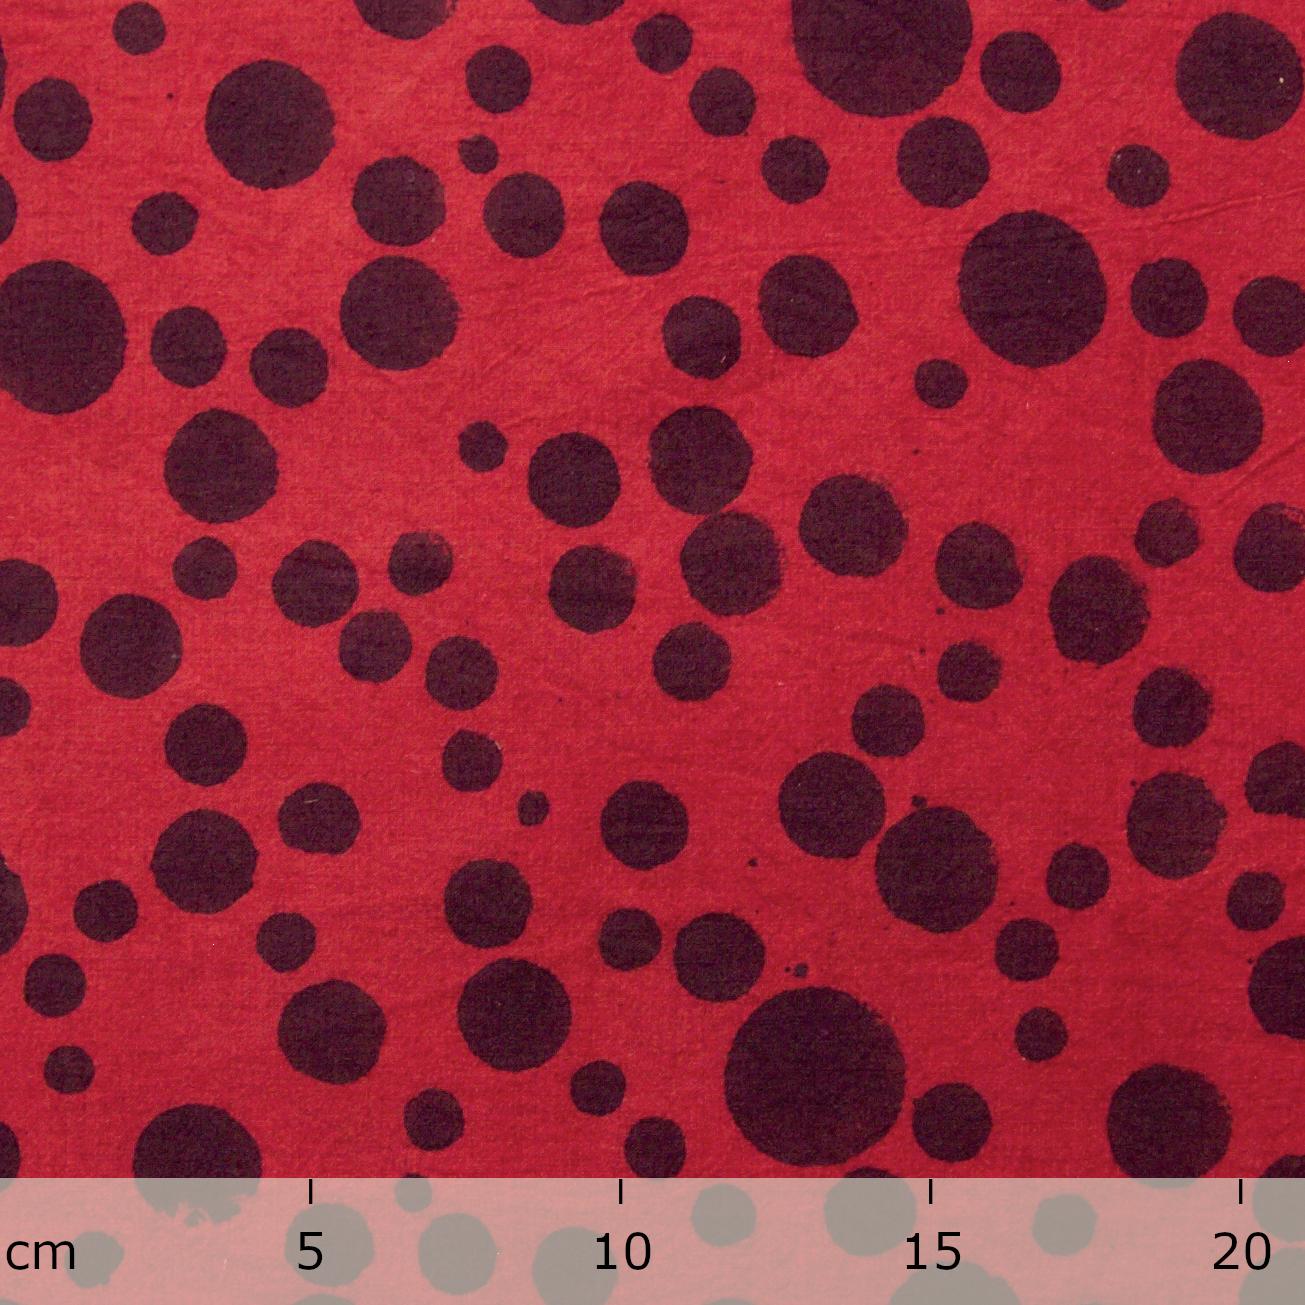 100% Block-Printed Cotton Fabric From India- Ajrak - Alizarin Black Dots Print - Ruler